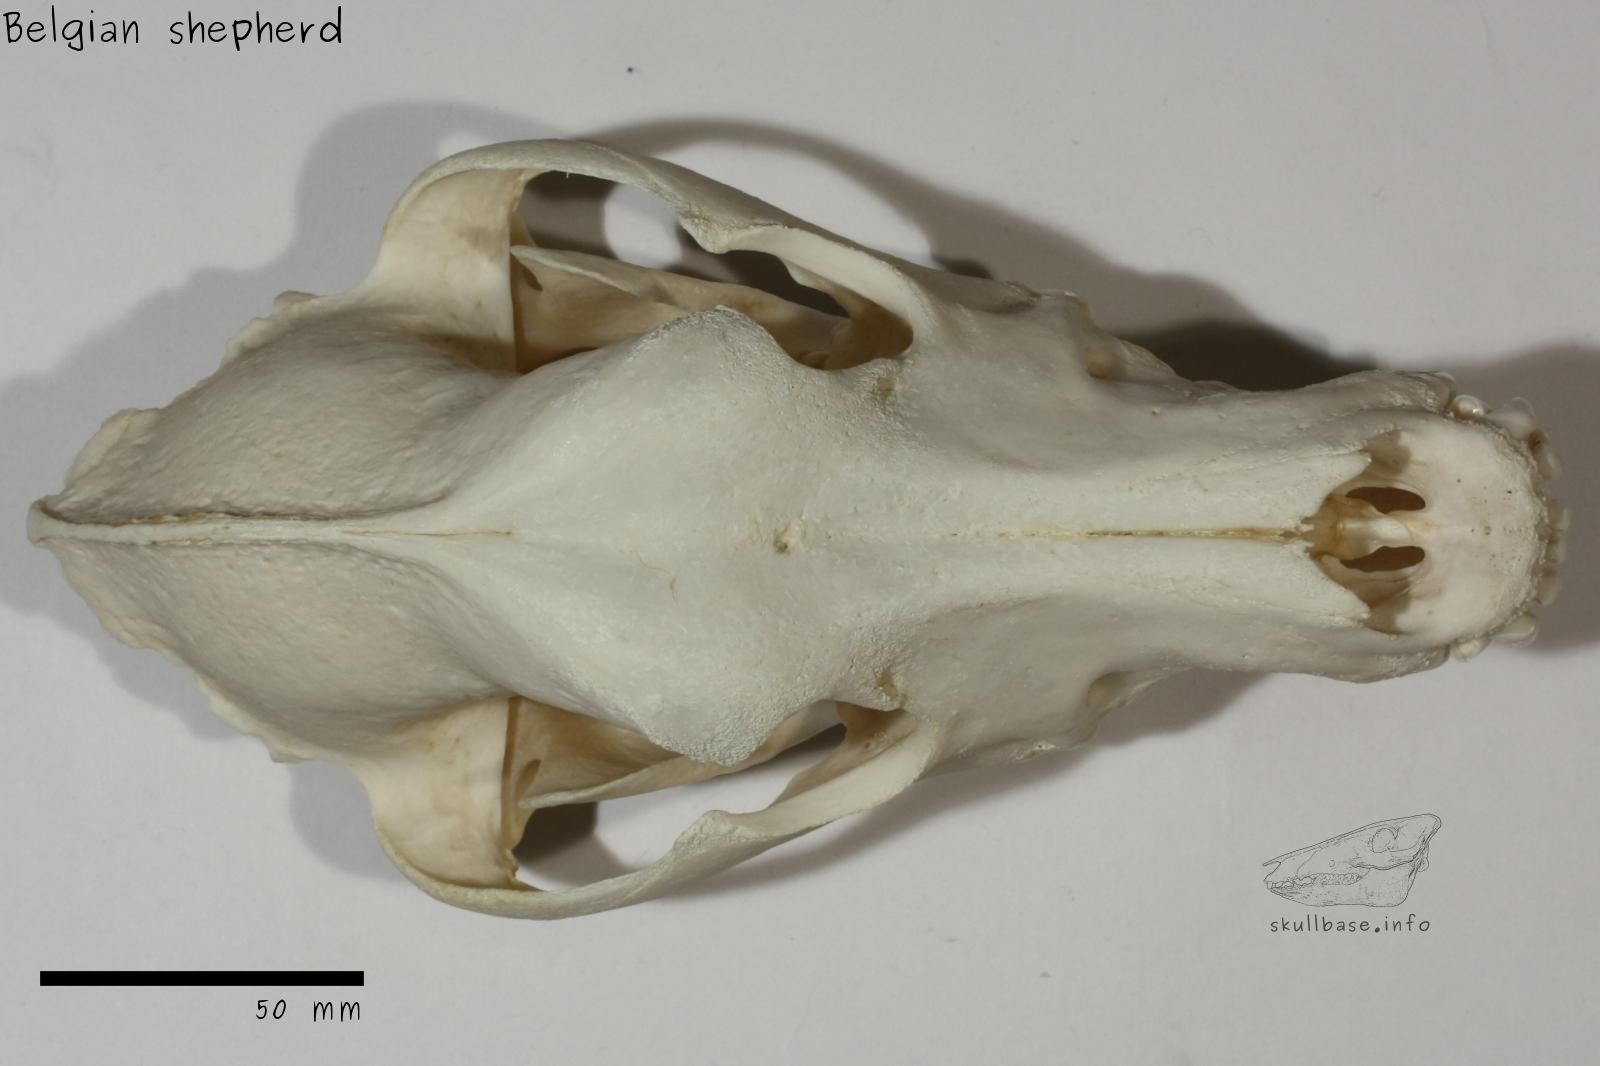 Belgian shepherd (Canis lupus familiaris) skull dorsal view